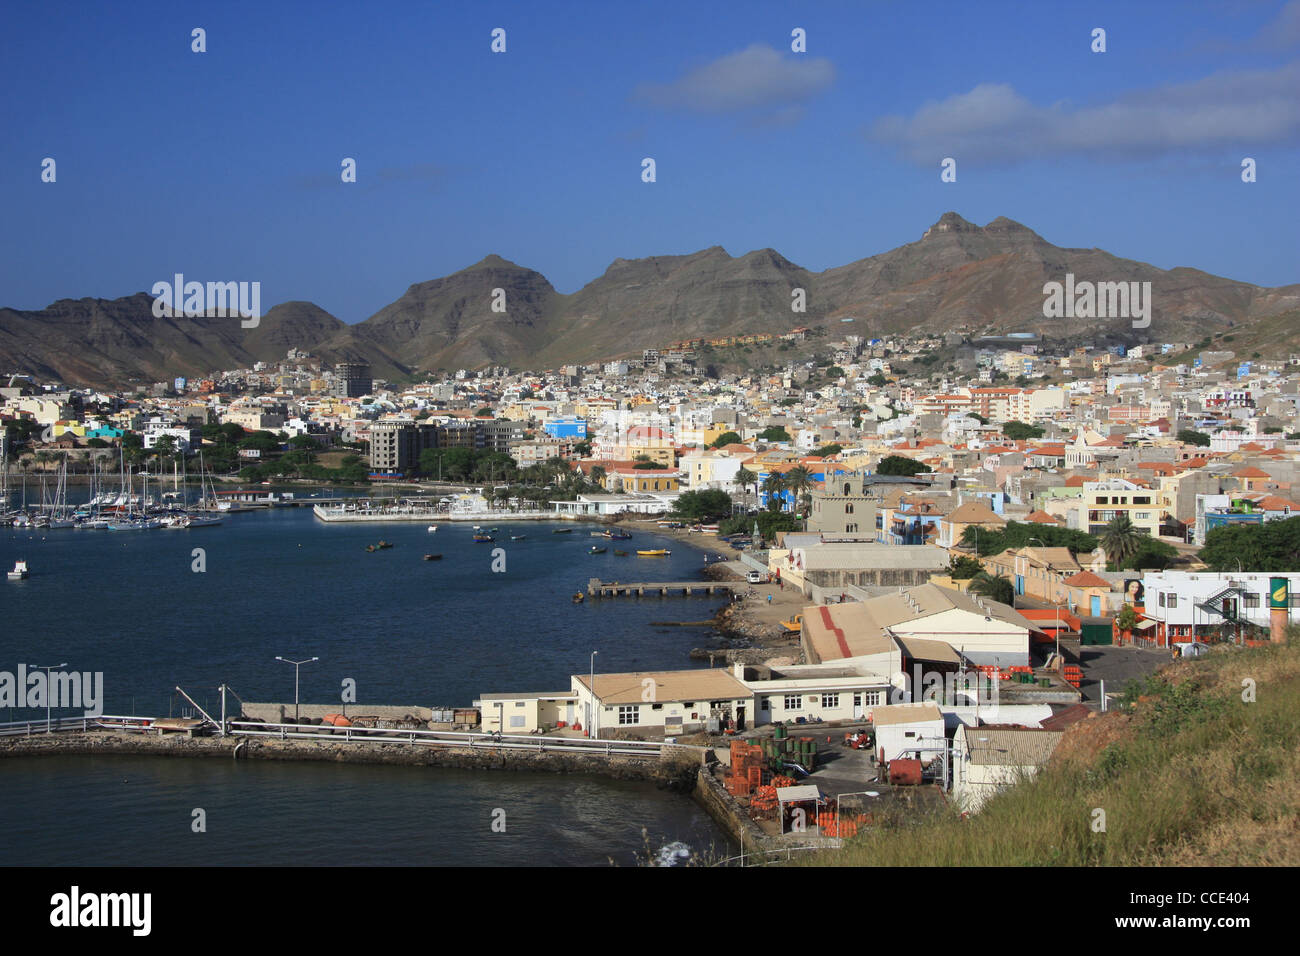 Looking down on Mindelo harbour, Sao Vicente Island, Cape Verde Archipelago Stock Photo